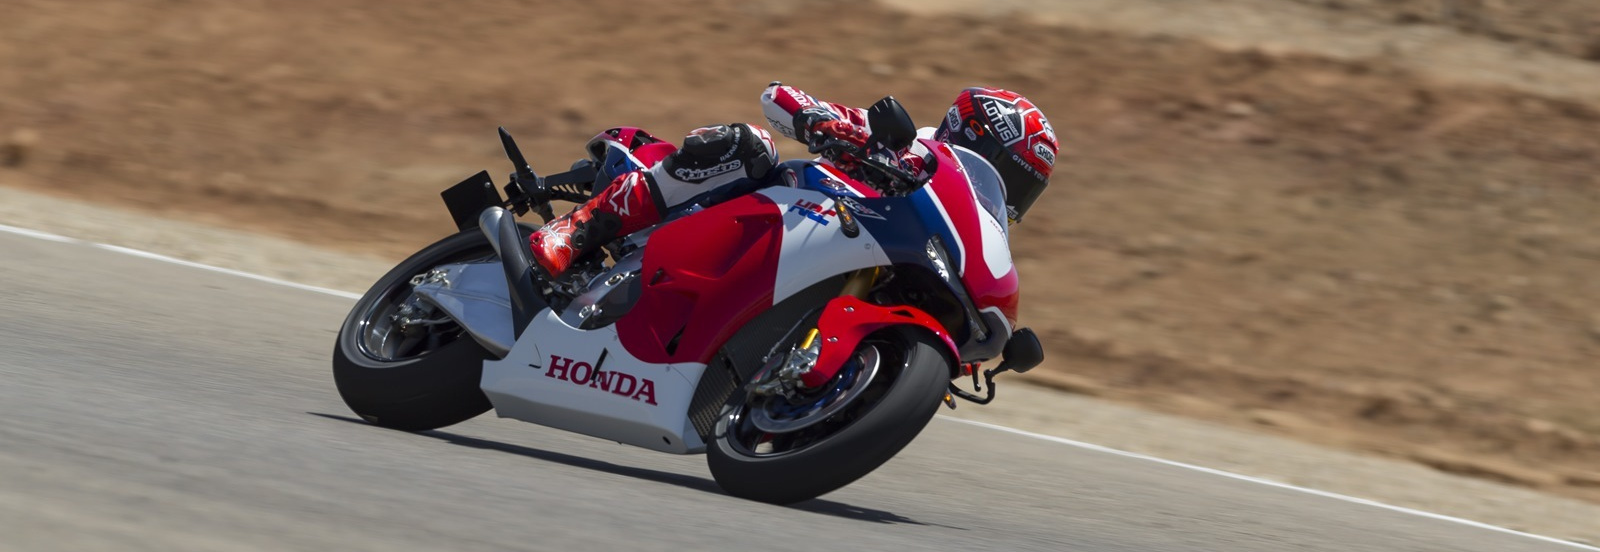 Moto del día: Honda RC213V-S